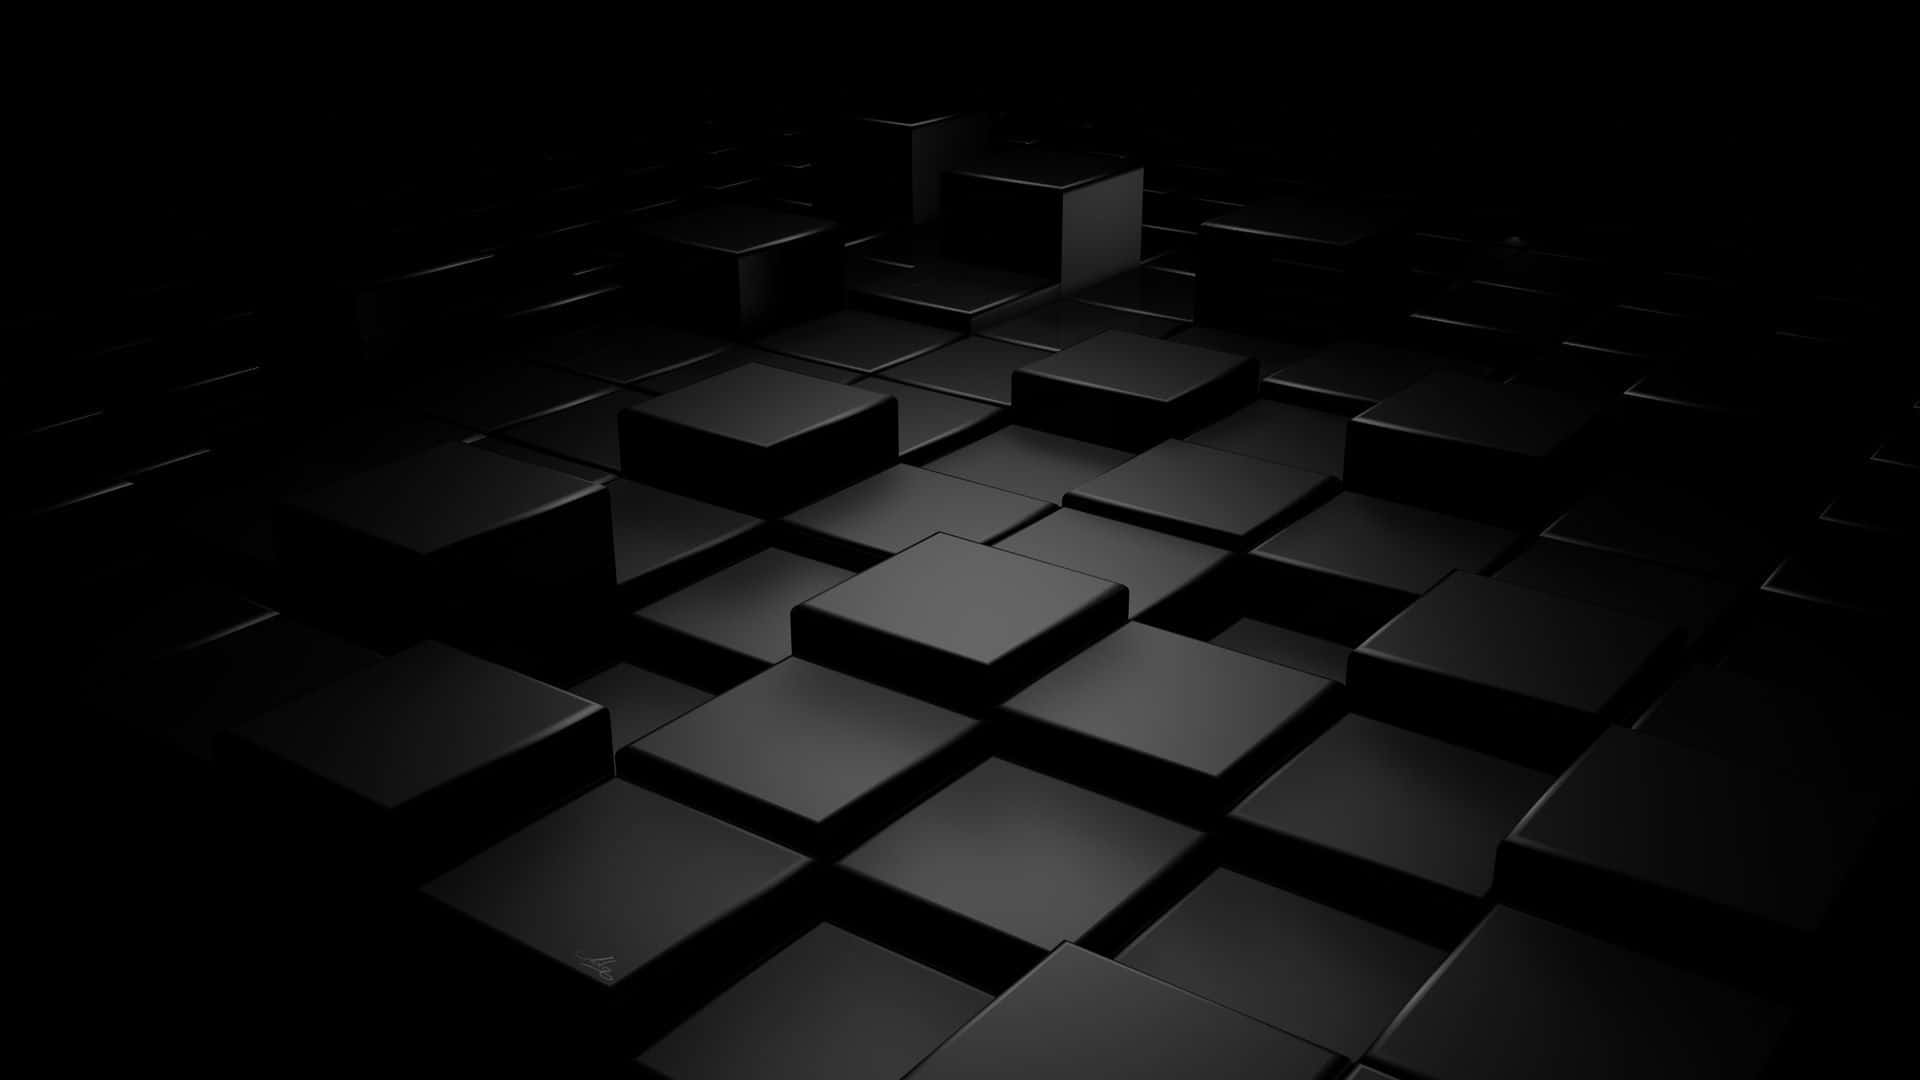 Merging 3d Cubes All Black Background